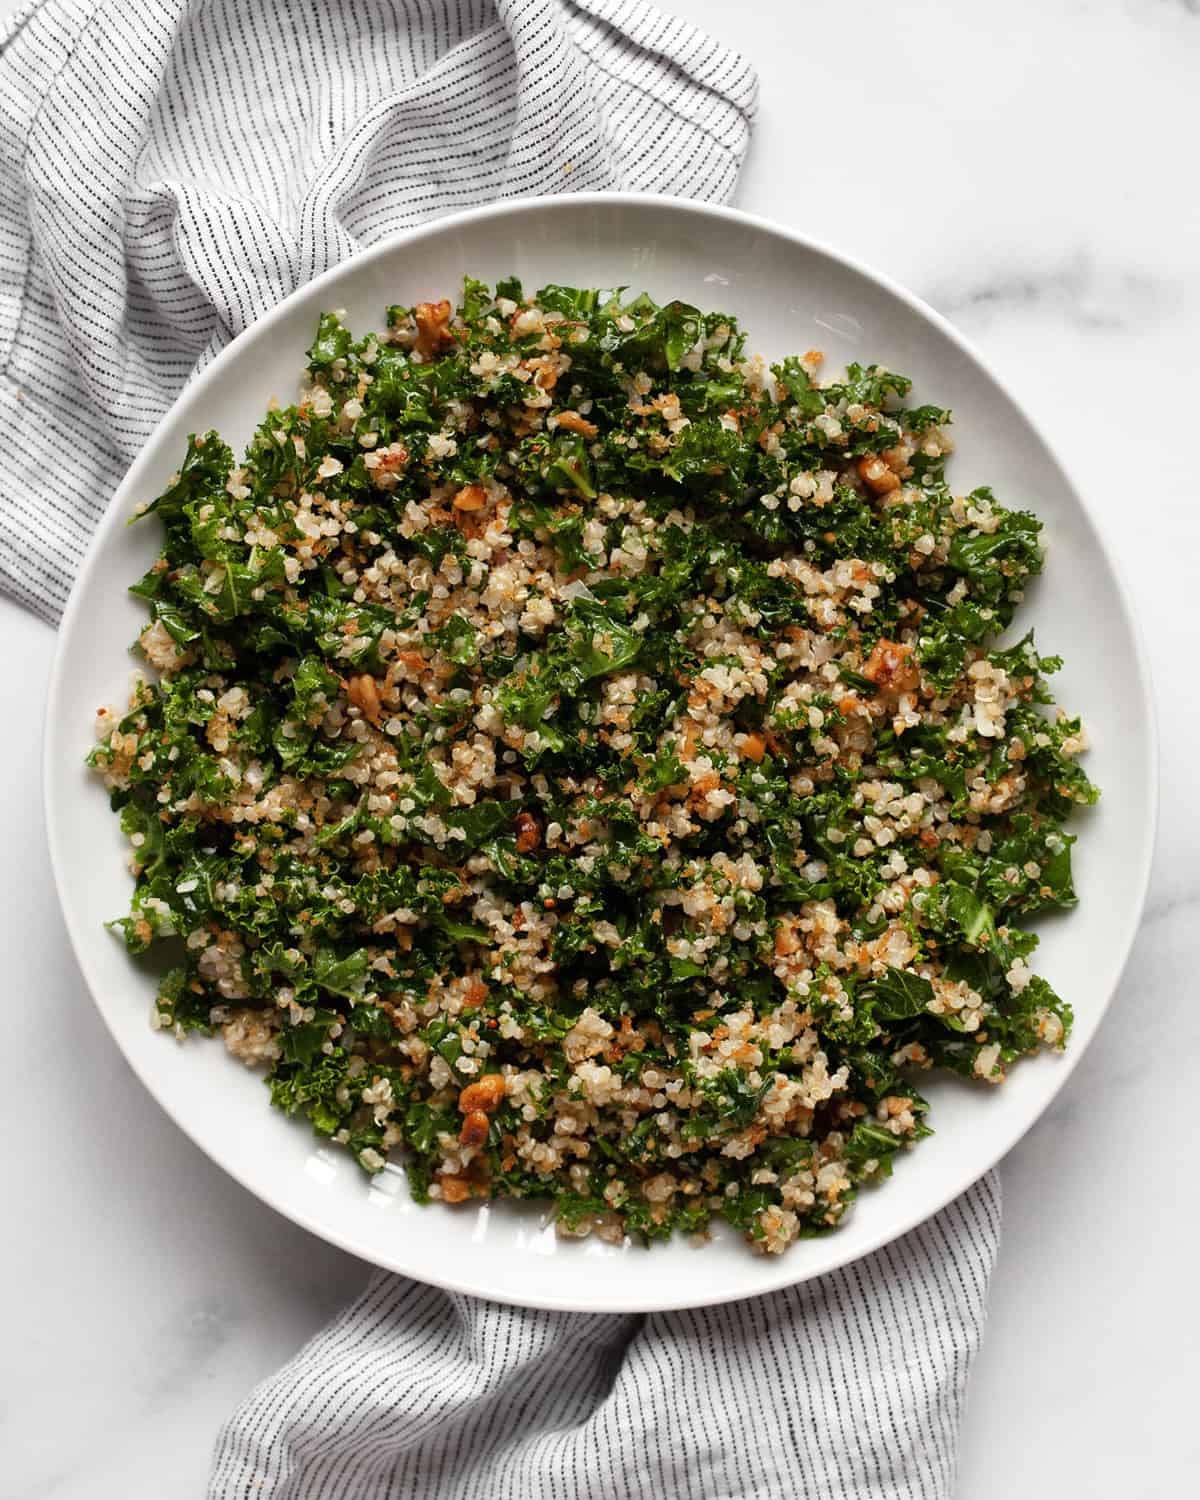 Kale quinoa salad on a plate.